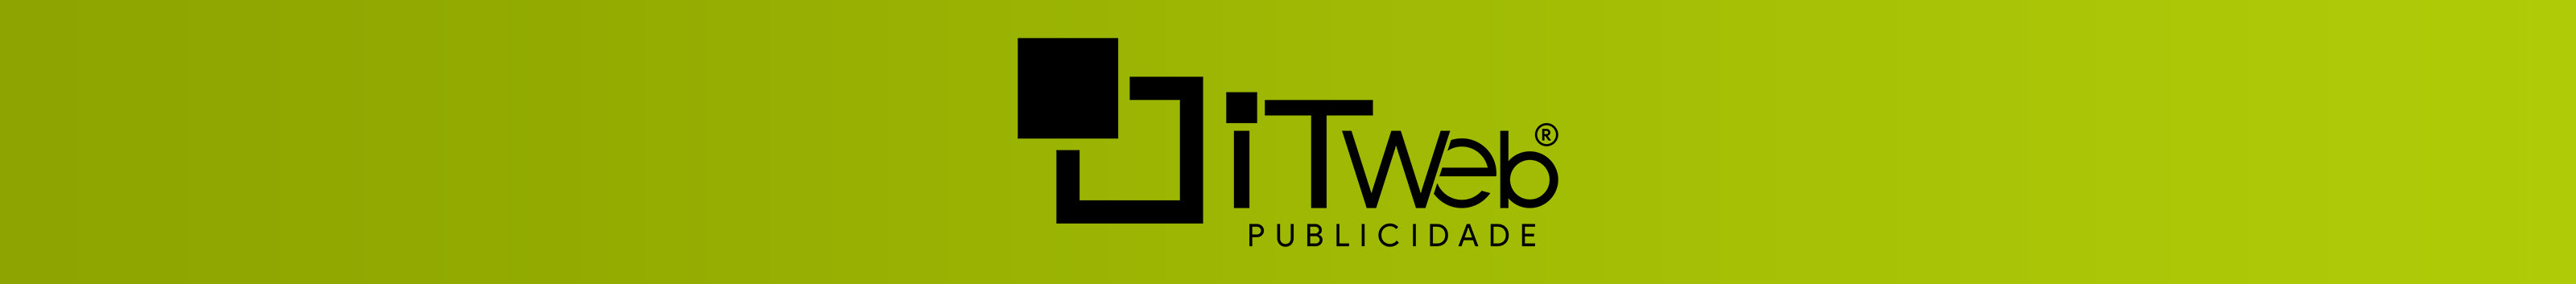 Itweb Publicidade's profile banner